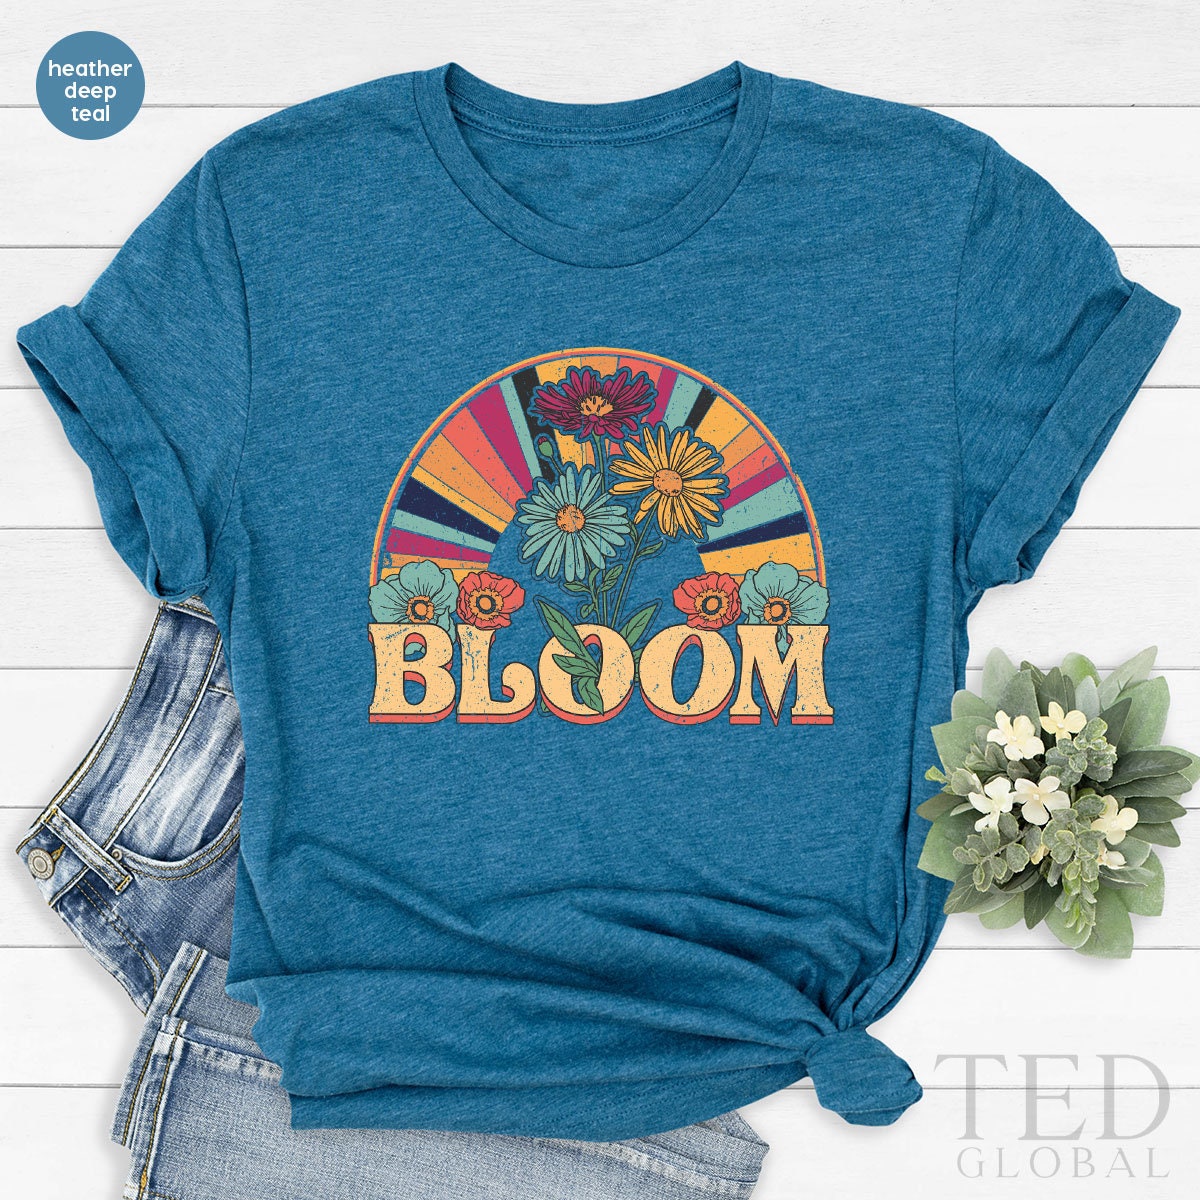 Cute Flowers Shirt, Funny Bloom T Shirt, Cute Boho T Shirt, Floral Shirts, Retro 6Os-70s Tee, Vintage Plant Lover T-Shirt, Wildflower Gift - Fastdeliverytees.com